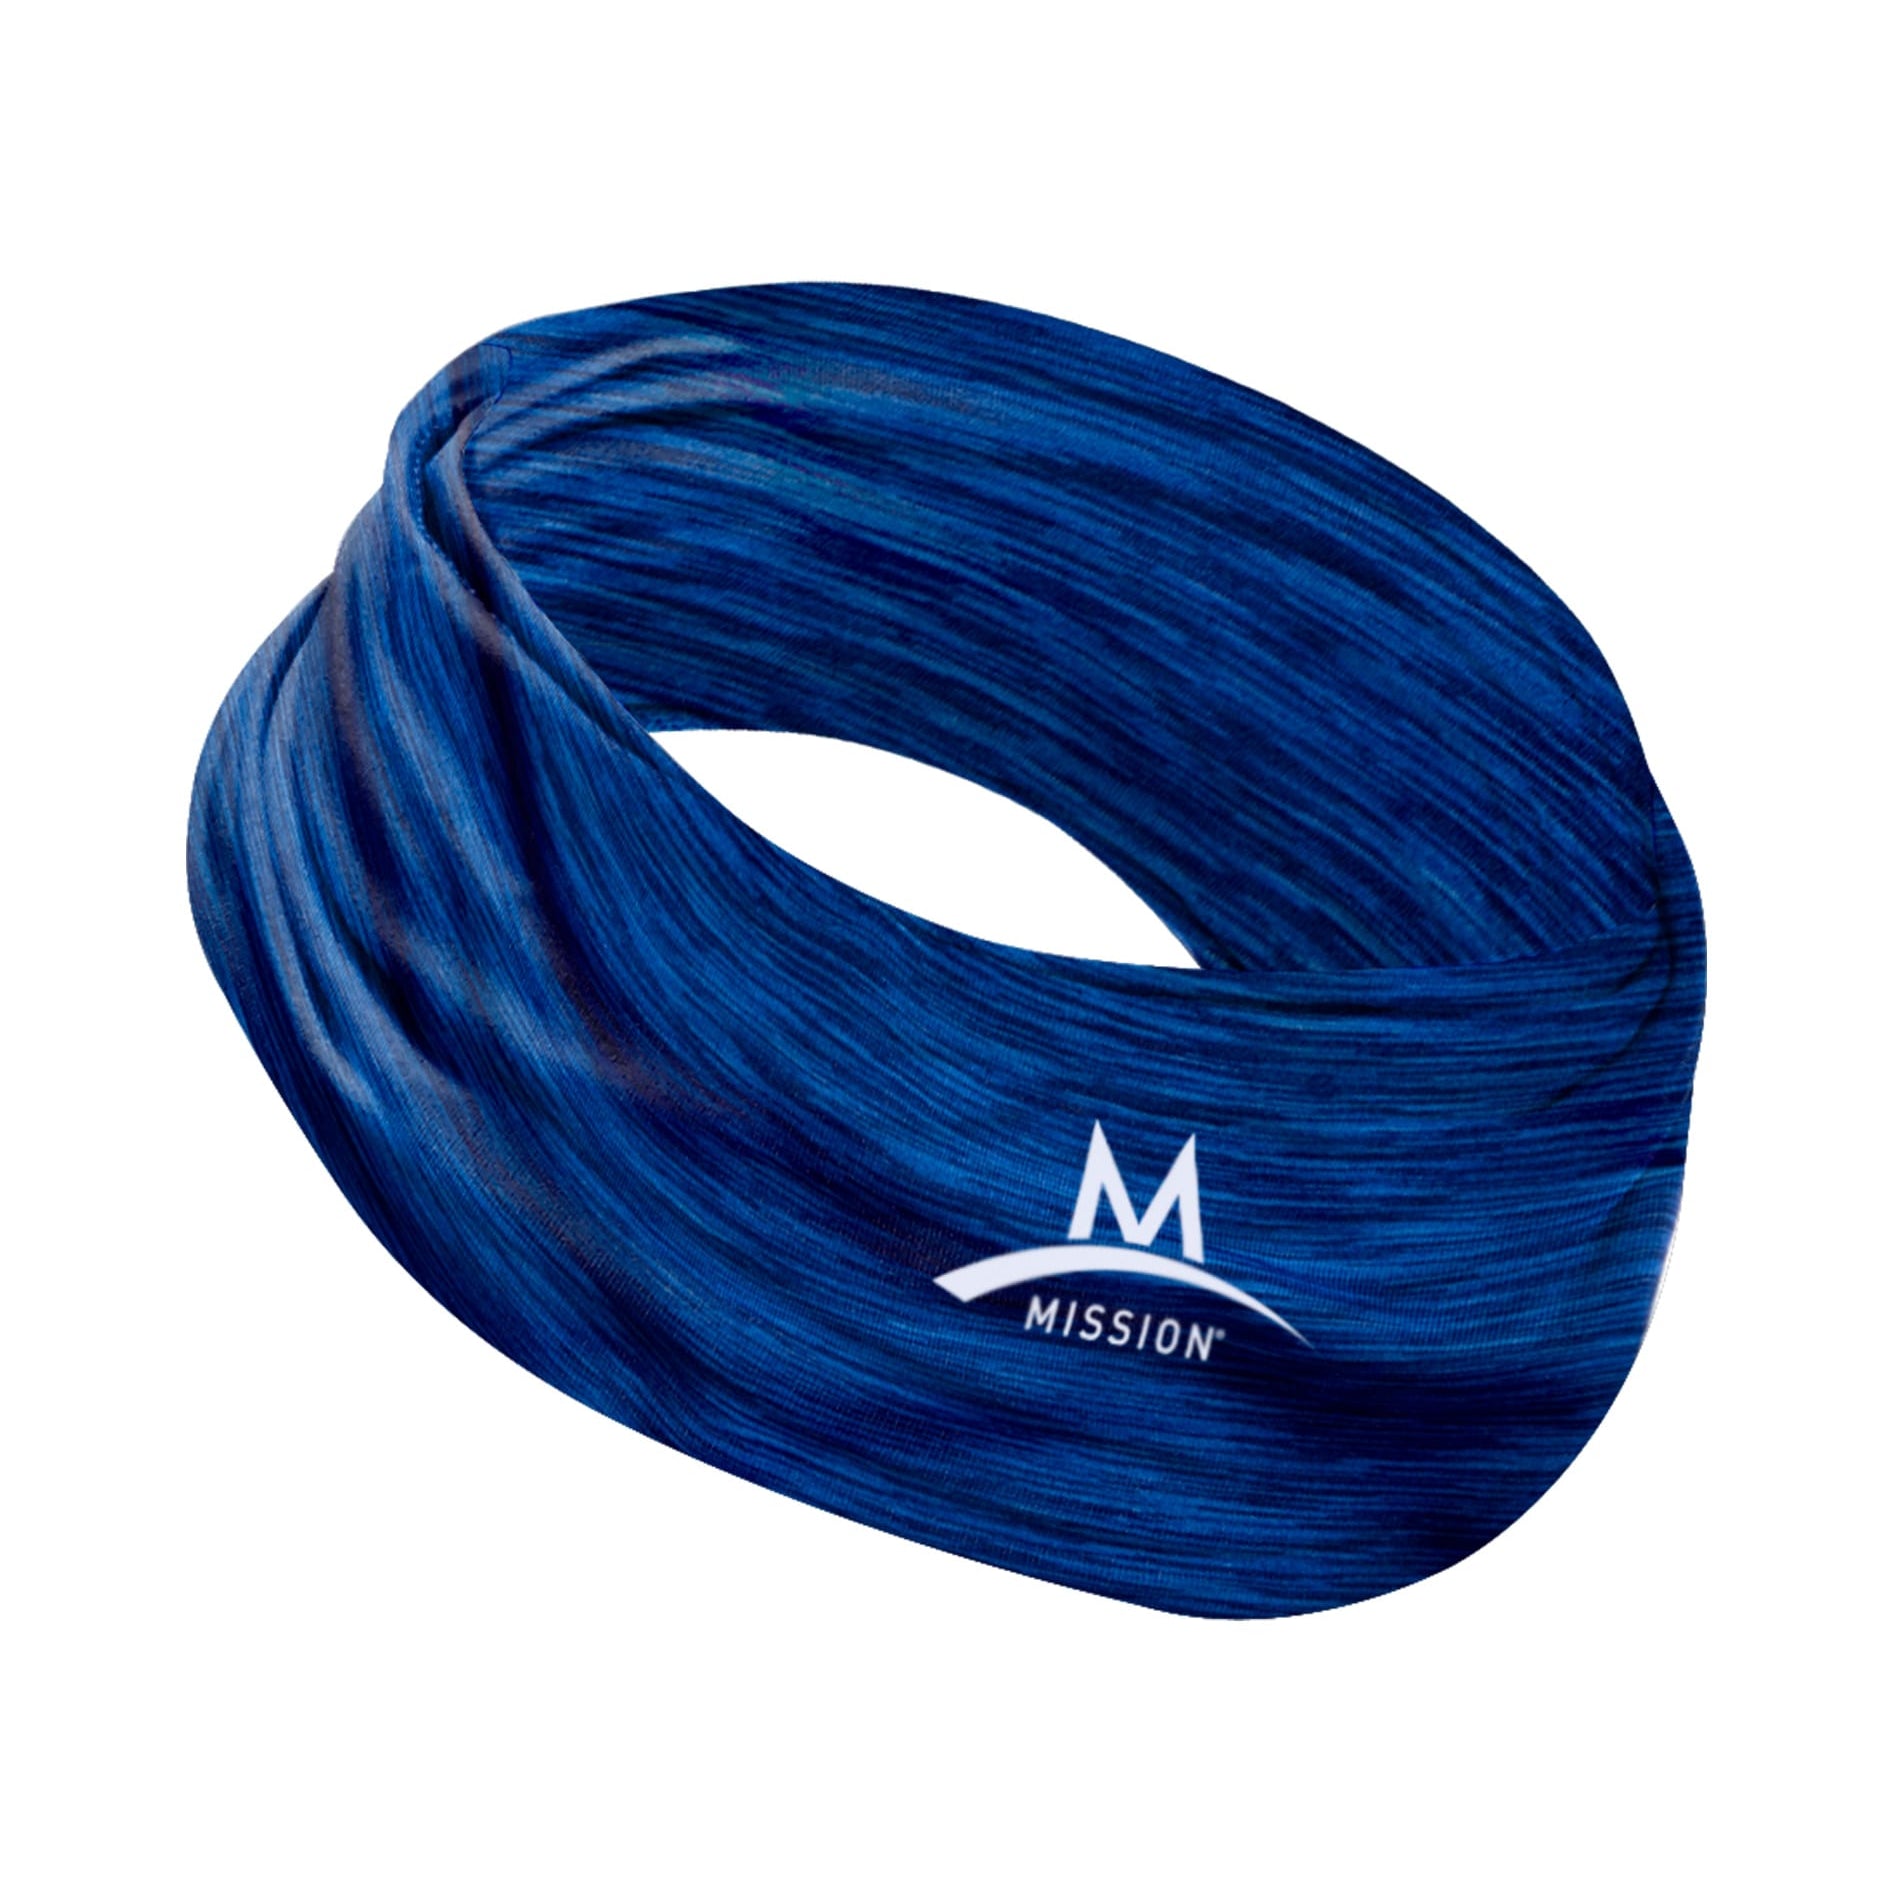 Mask | Royal Blue Space Dye Neck Gaiters MISSION   